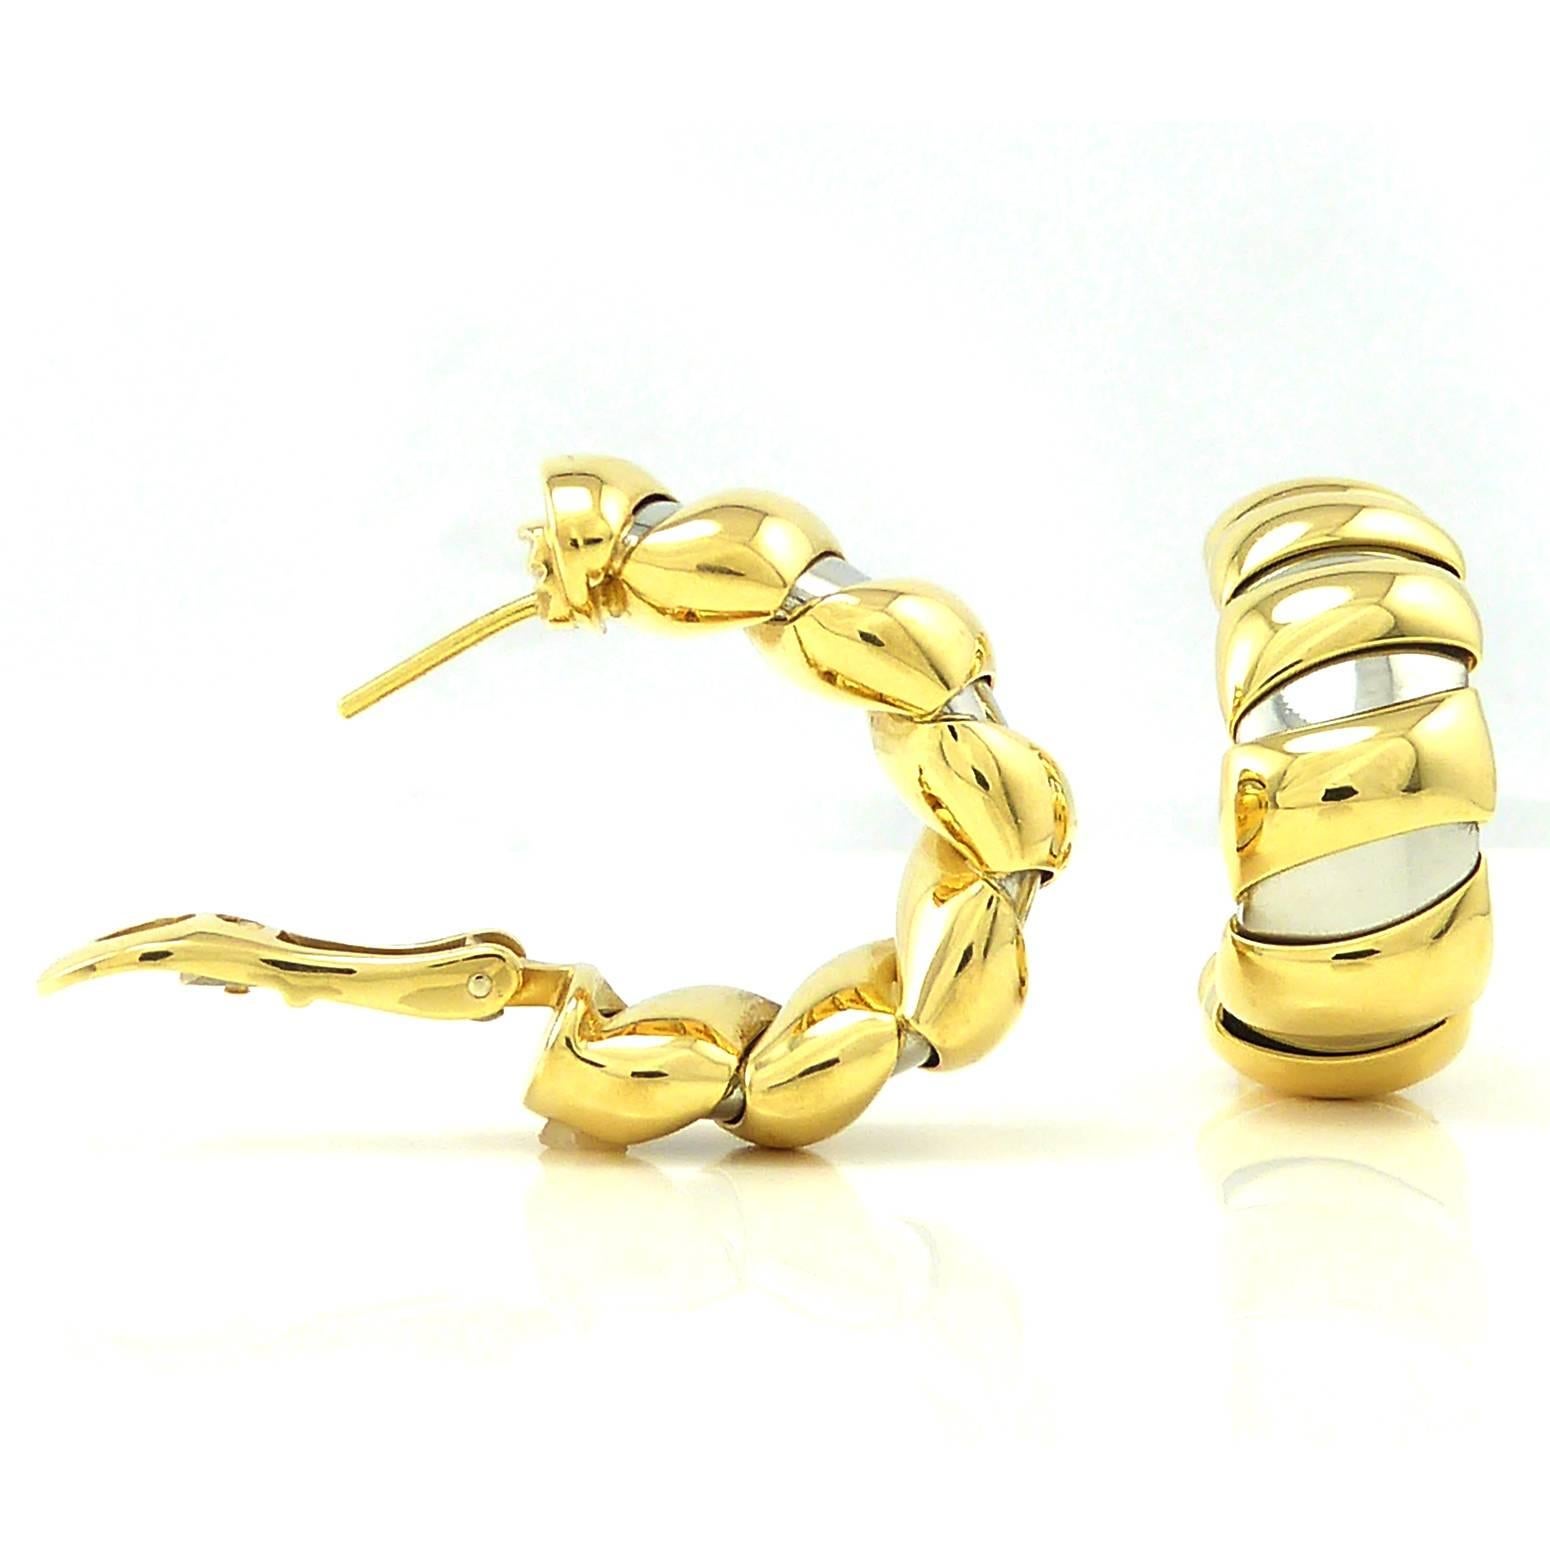 Retro Bulgari Earrings, 18 Carat Gold Steel Banded Hoops, Tubogas Design